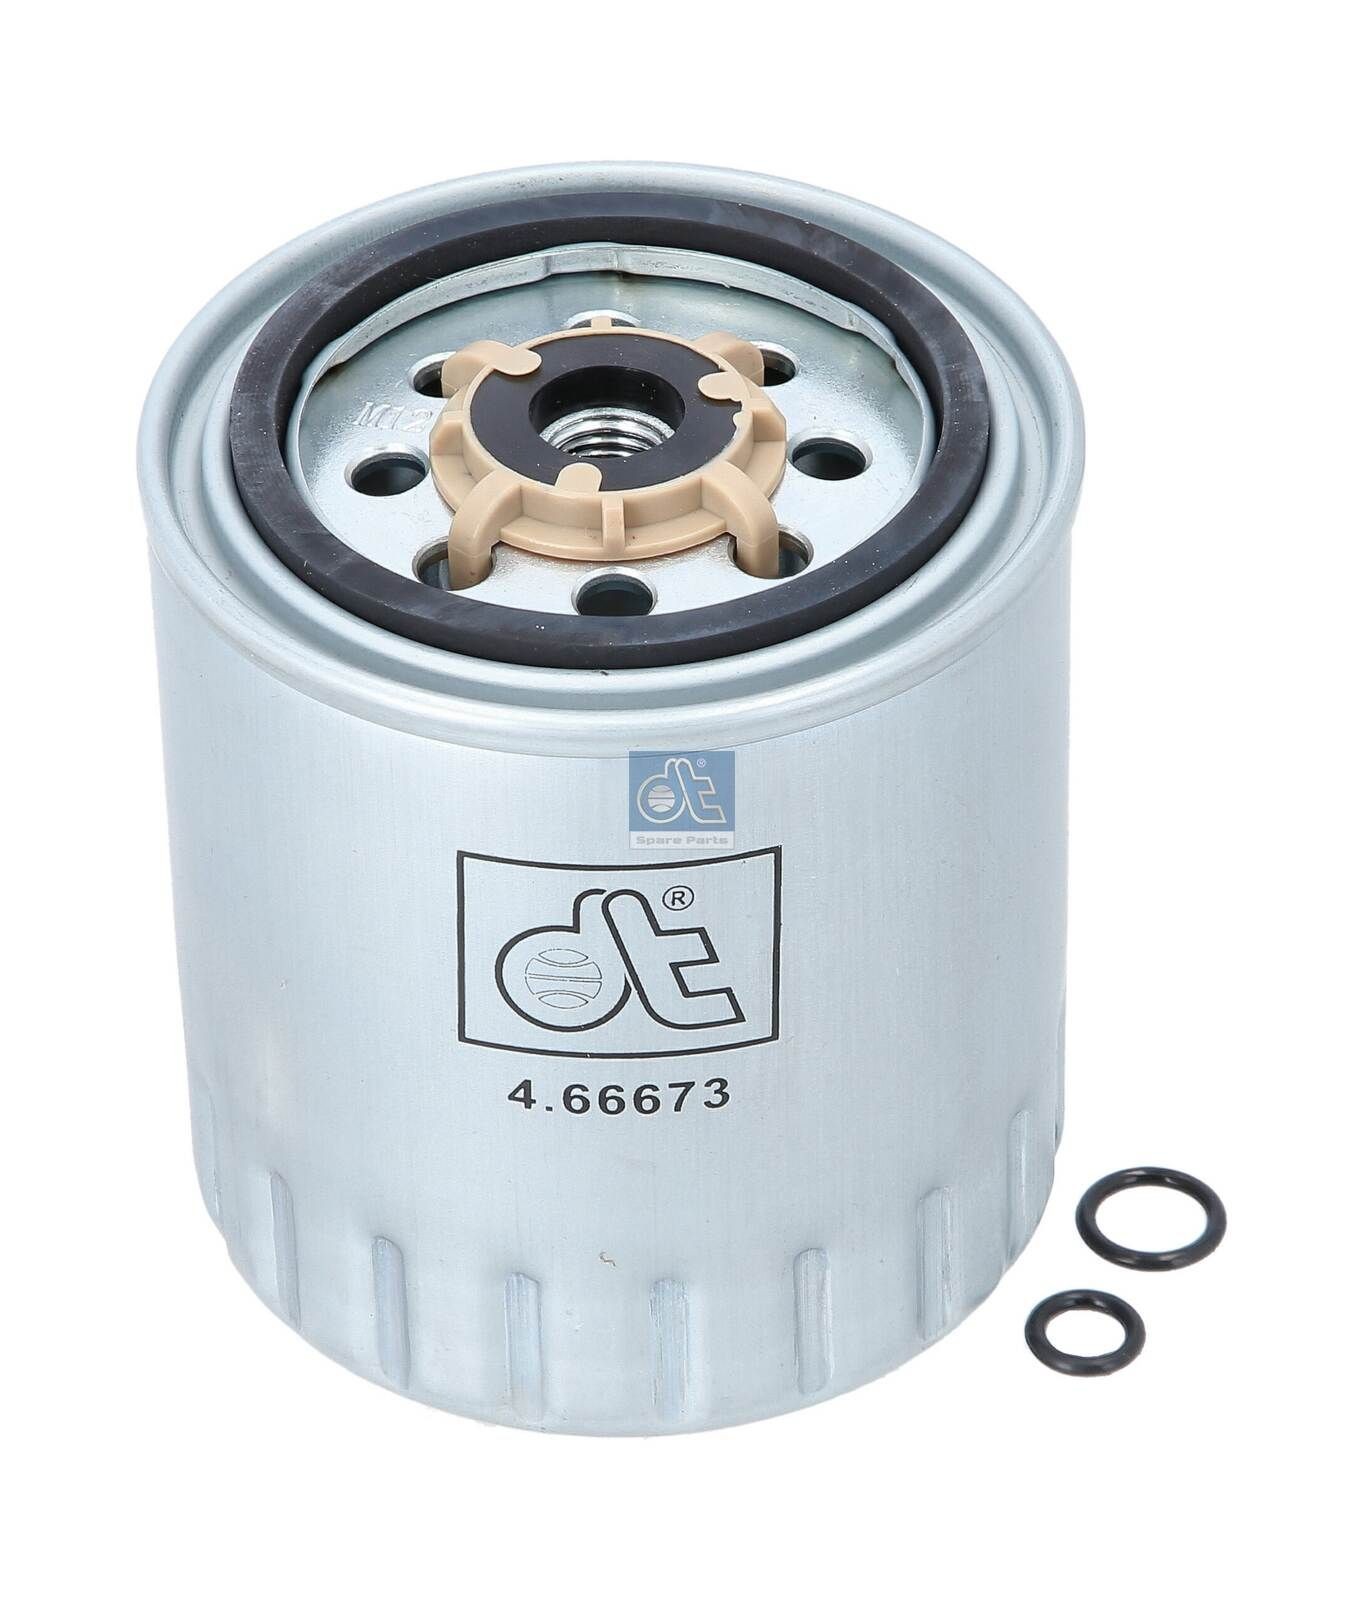 H35WK02 D87 DT Spare Parts 4.66673 Fuel filter A601 090 1652